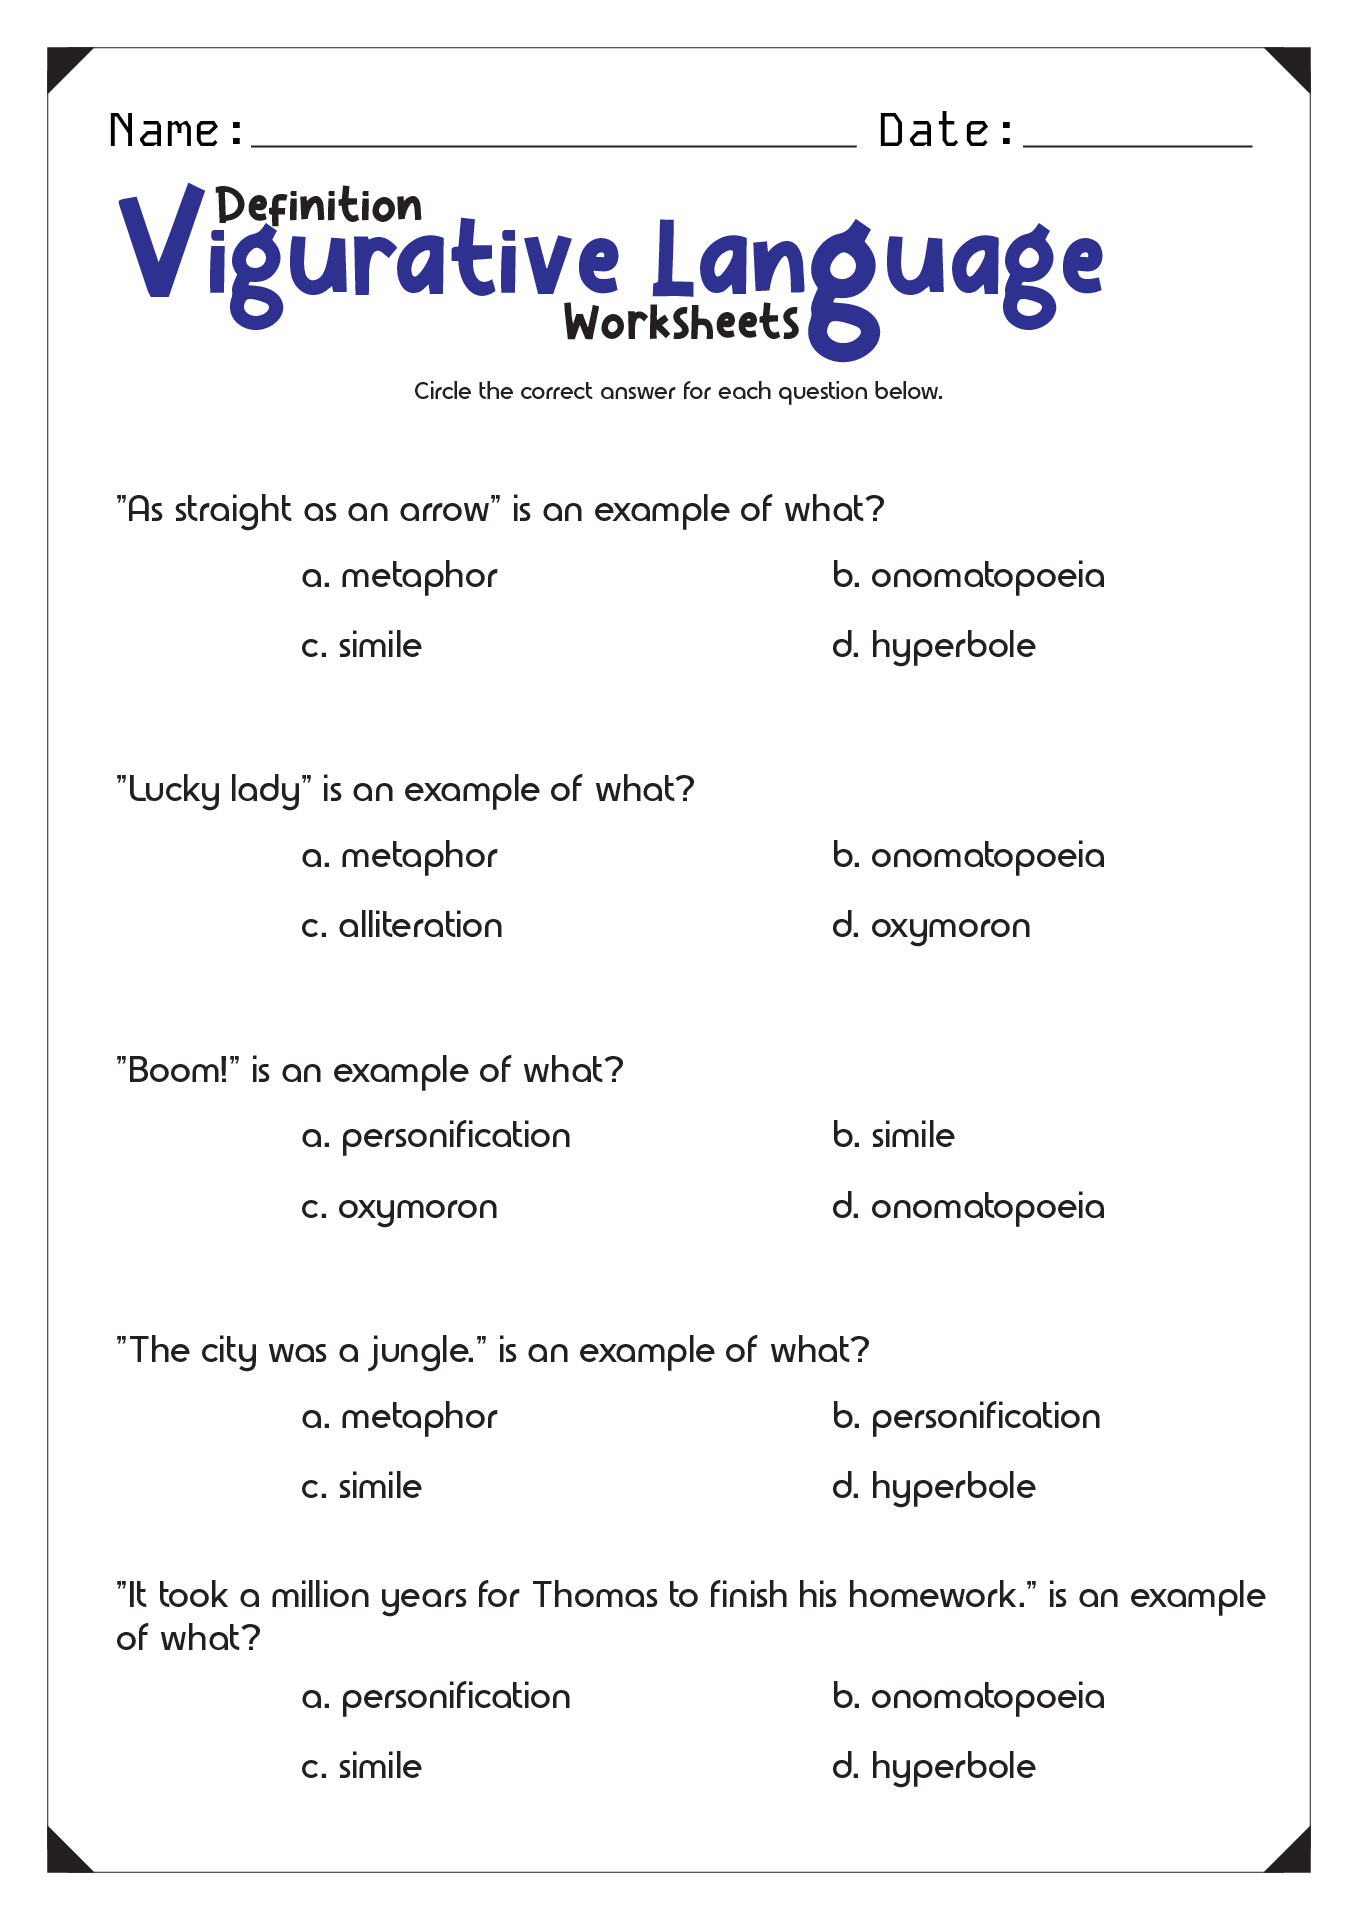 Definition Figurative Language Worksheets